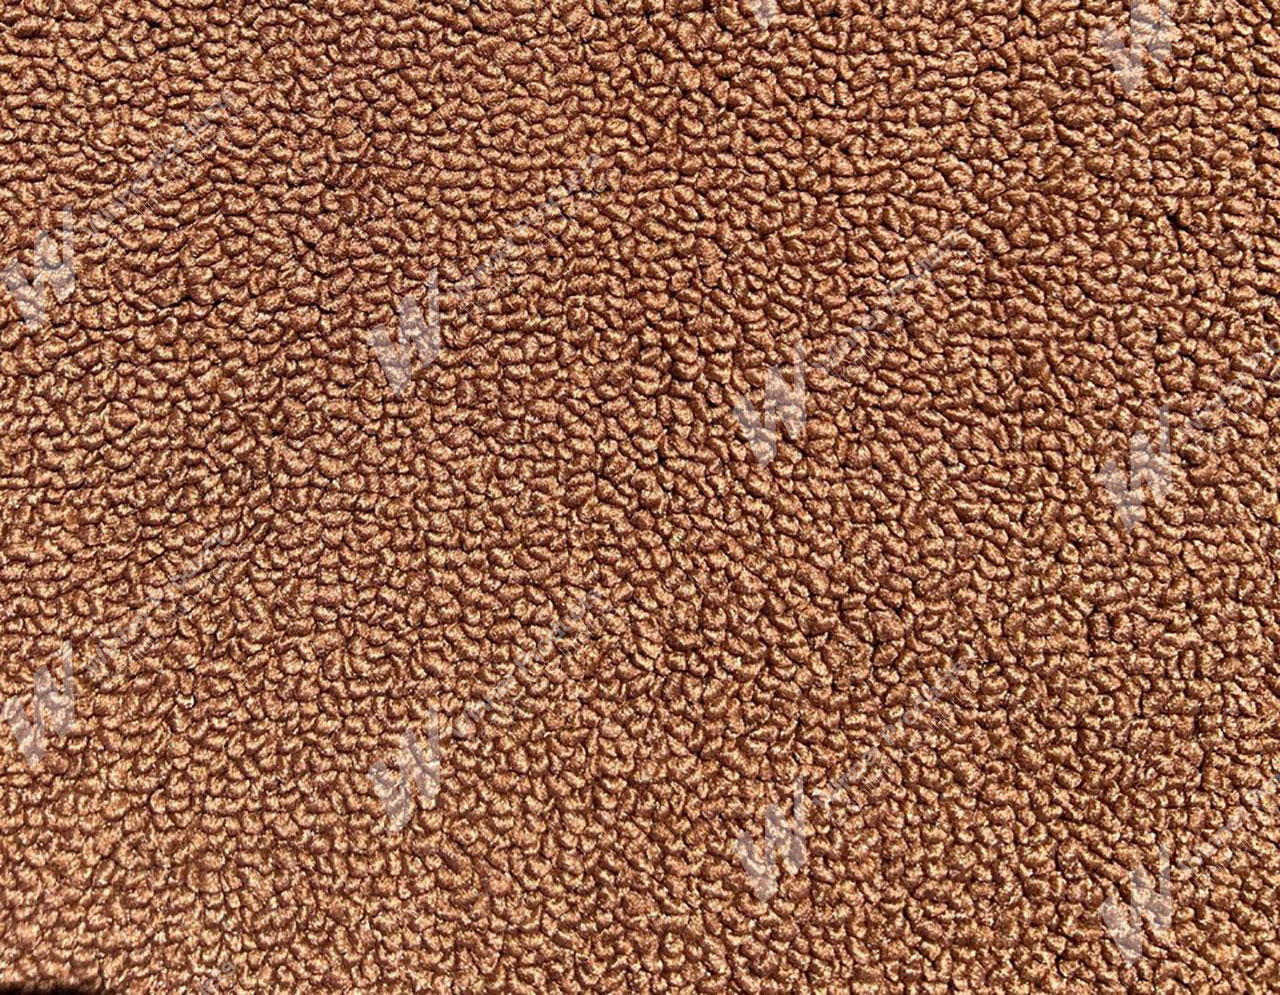 Holden Kingswood HJ Kingswood Panel Van 67V Tan Carpet (Image 1 of 1)